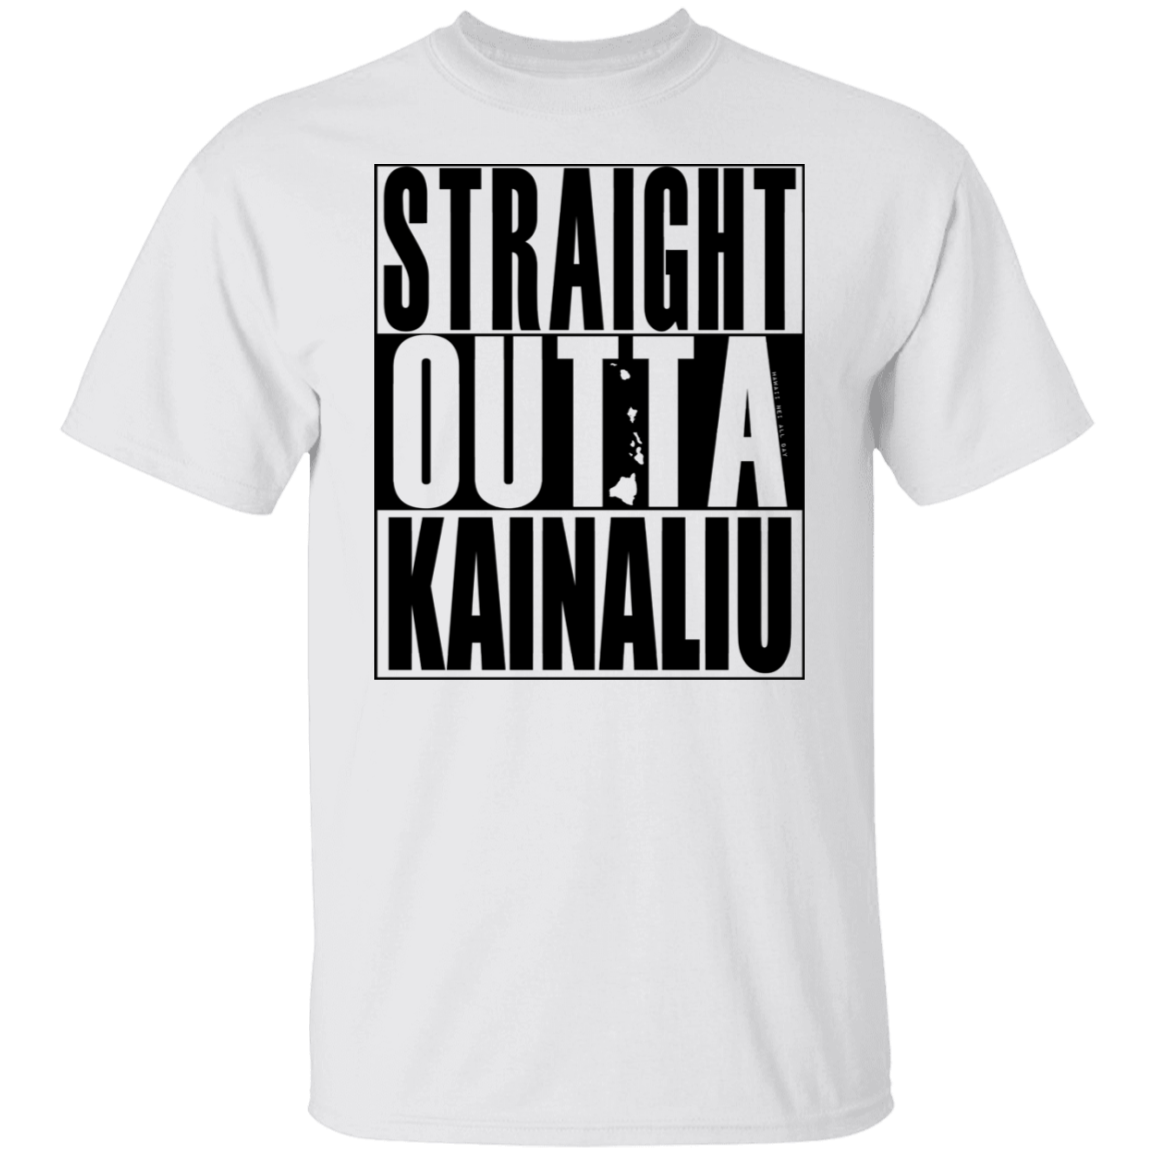 Straight Outta Kainaliu (black ink) T-Shirt